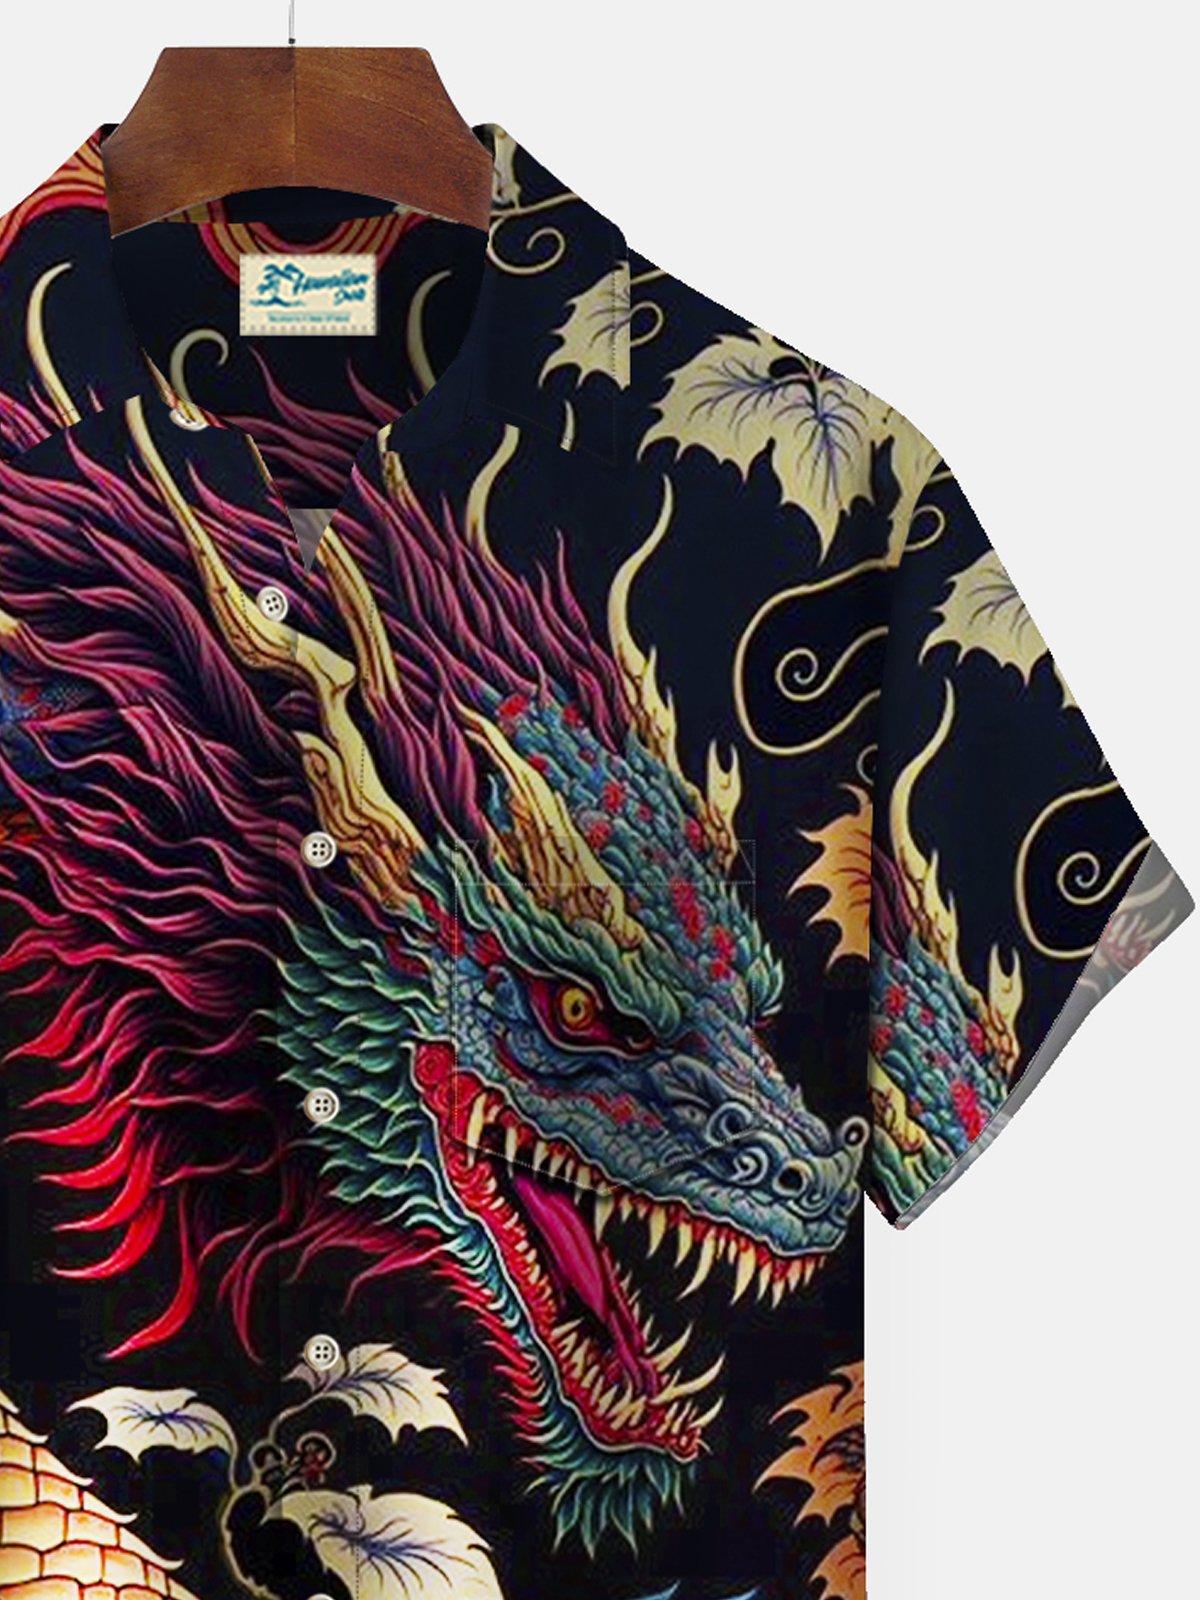 Royaura Japanese Retro Oriental Dragon Men's Aloha Shirts Stretch Large Size Camp Pocket Animal Button Shirts